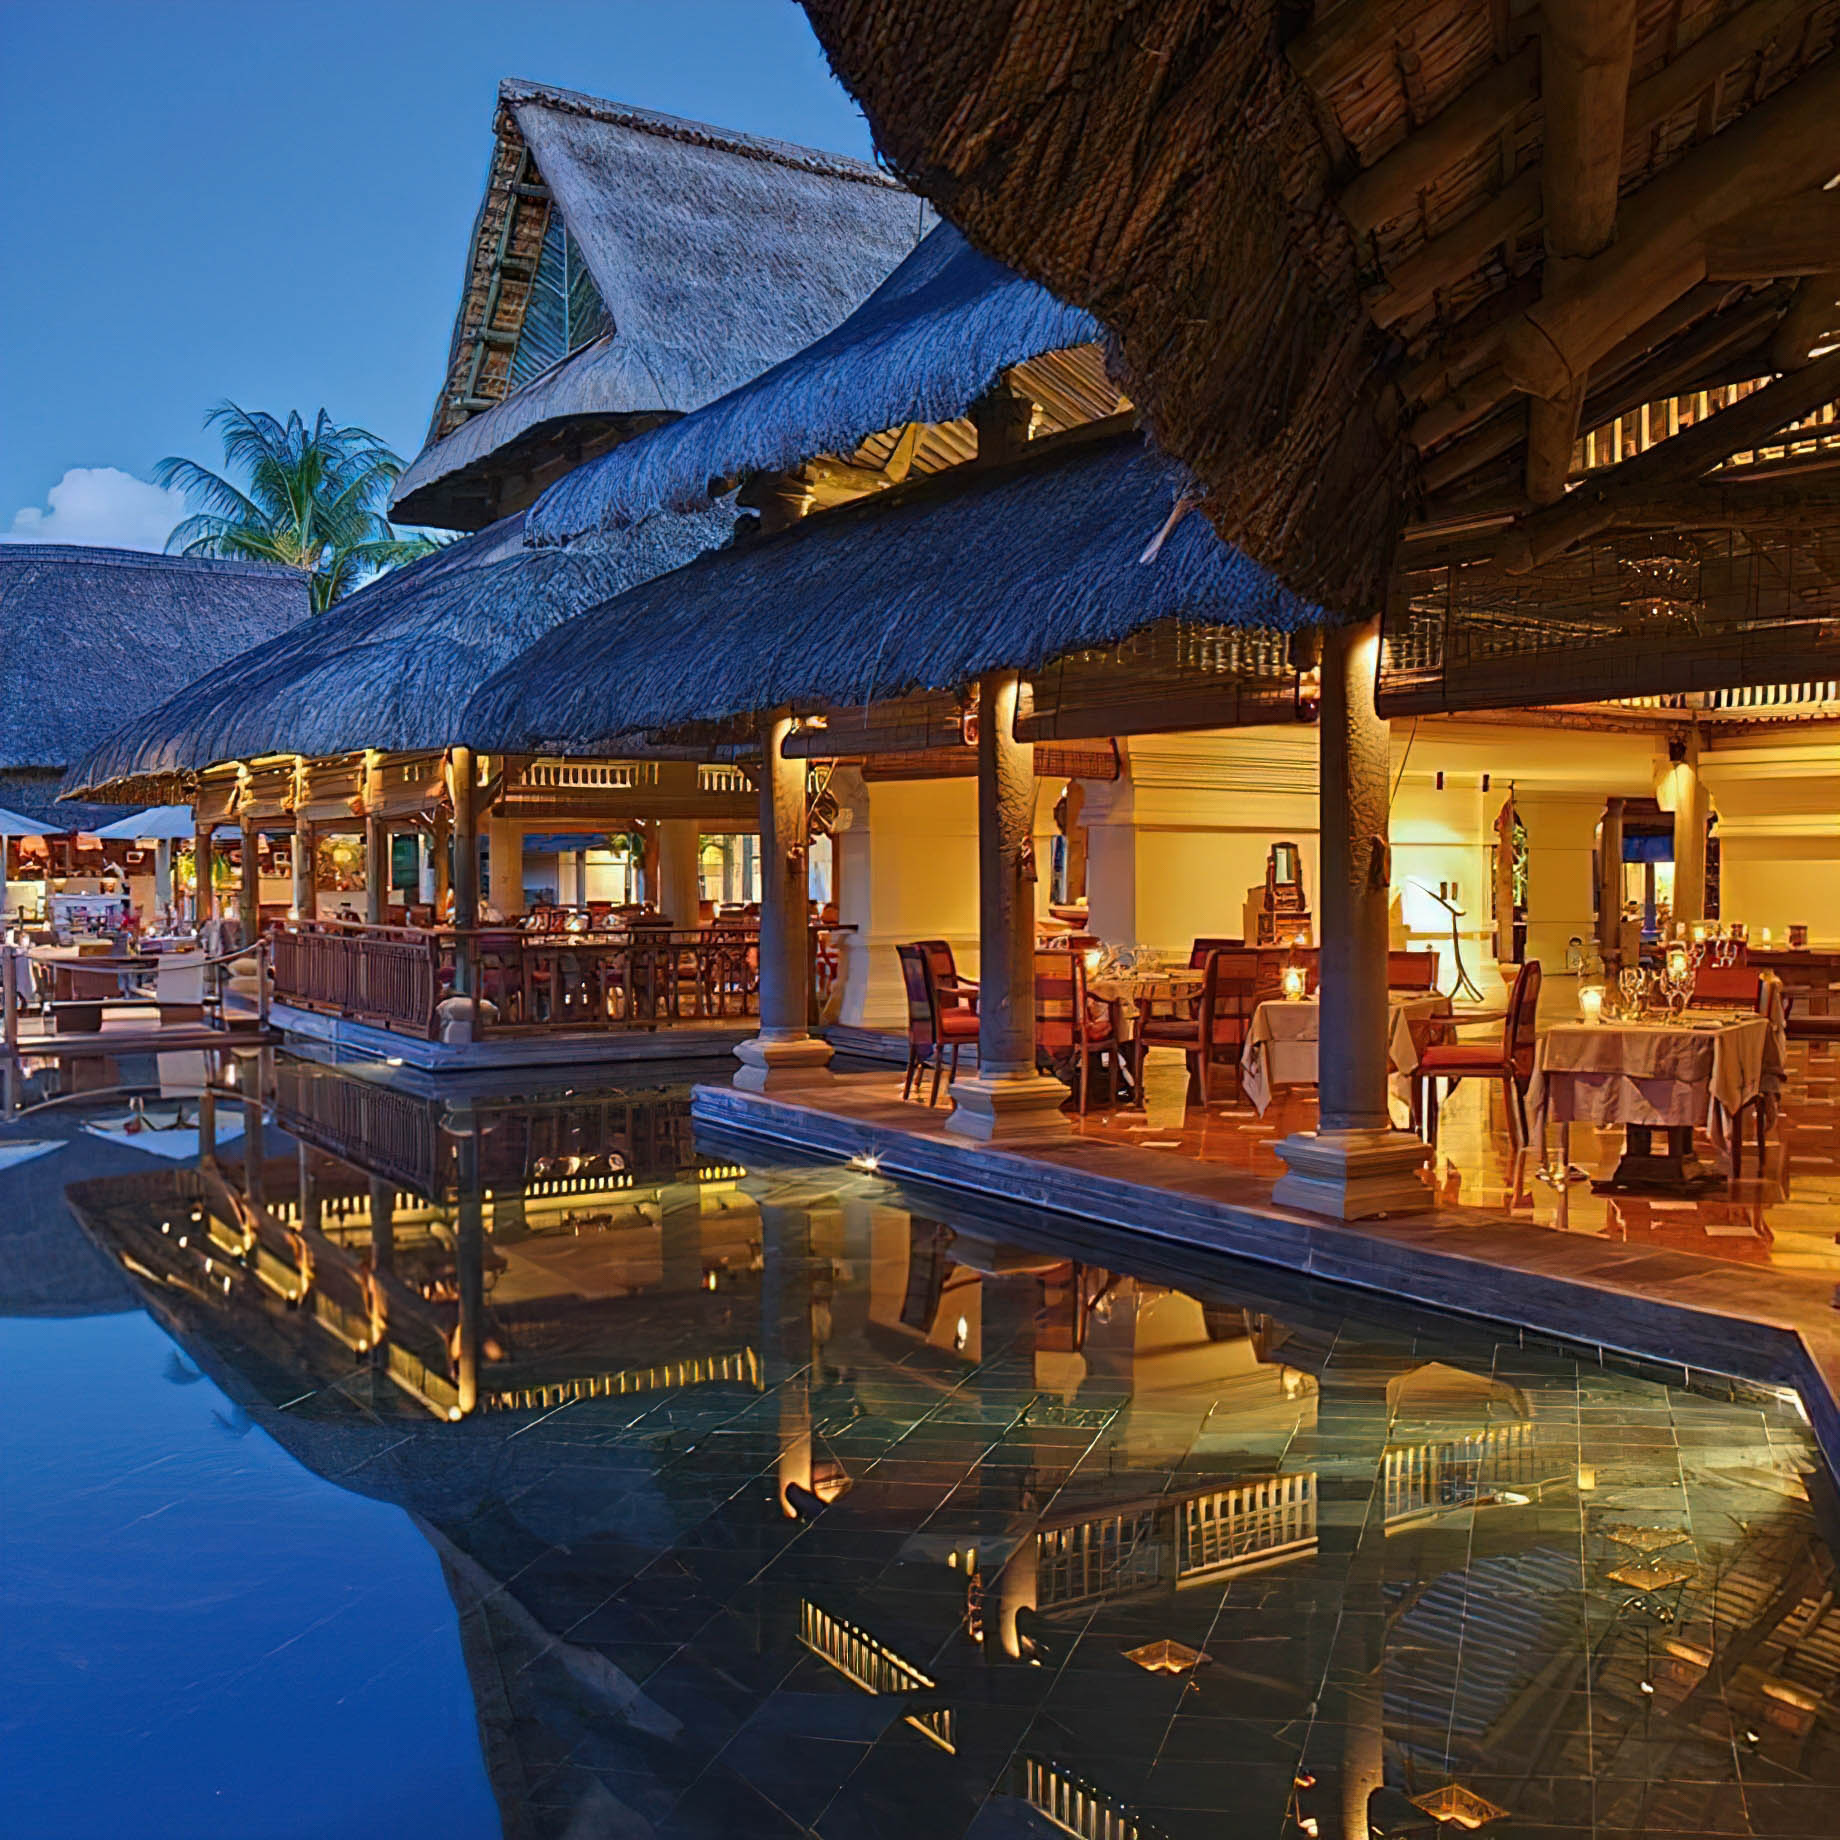 Constance Prince Maurice Resort - Mauritius - Archipel Restaurant Poolside Night View